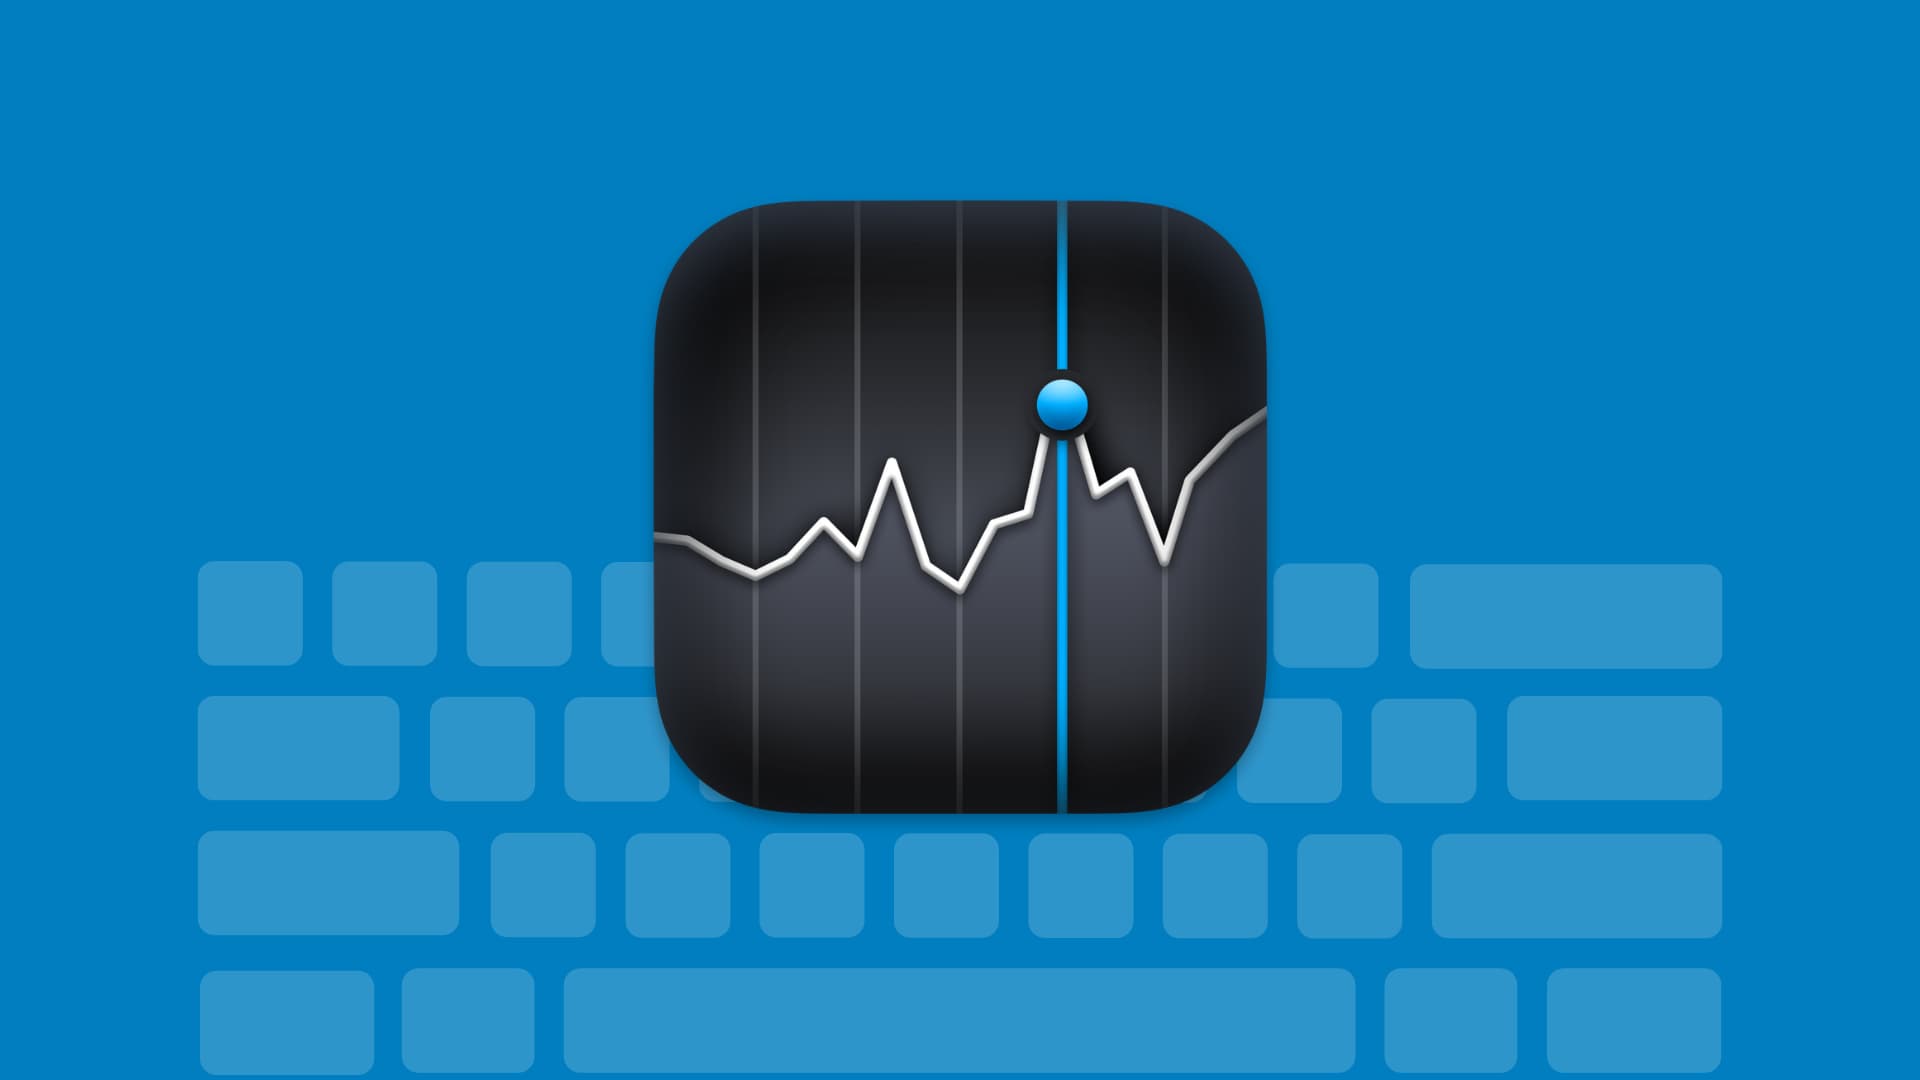 Keyboard shortcuts for Stocks on Mac